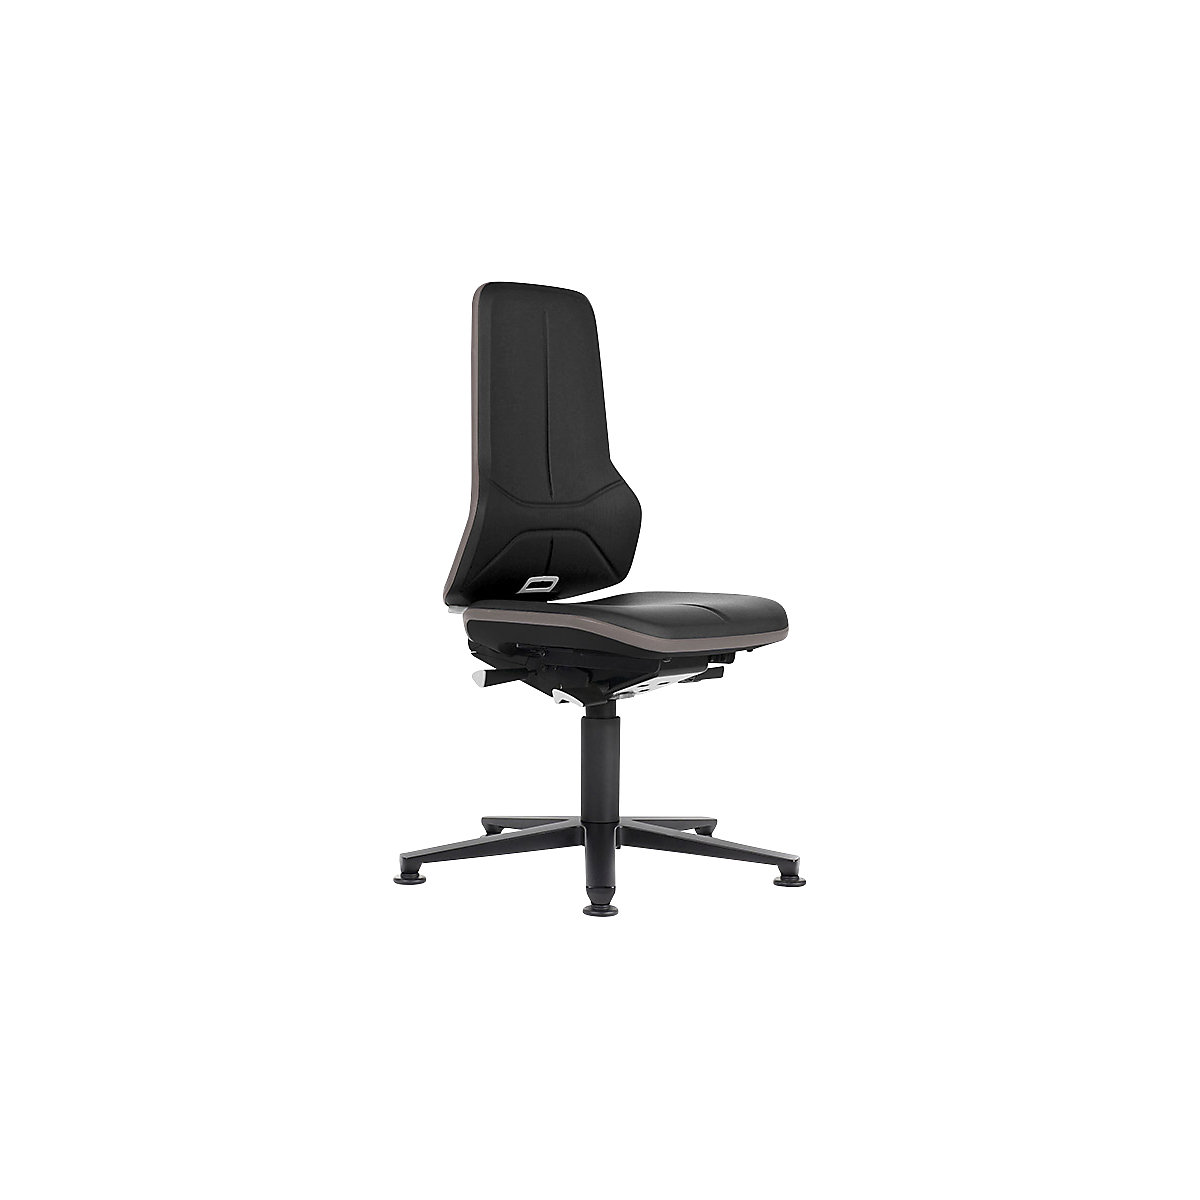 Radna okretna stolica NEON ESD, kliznik – bimos, sinkroni mehanizam, umjetna koža, fleksibilna traka u sivoj boji-6